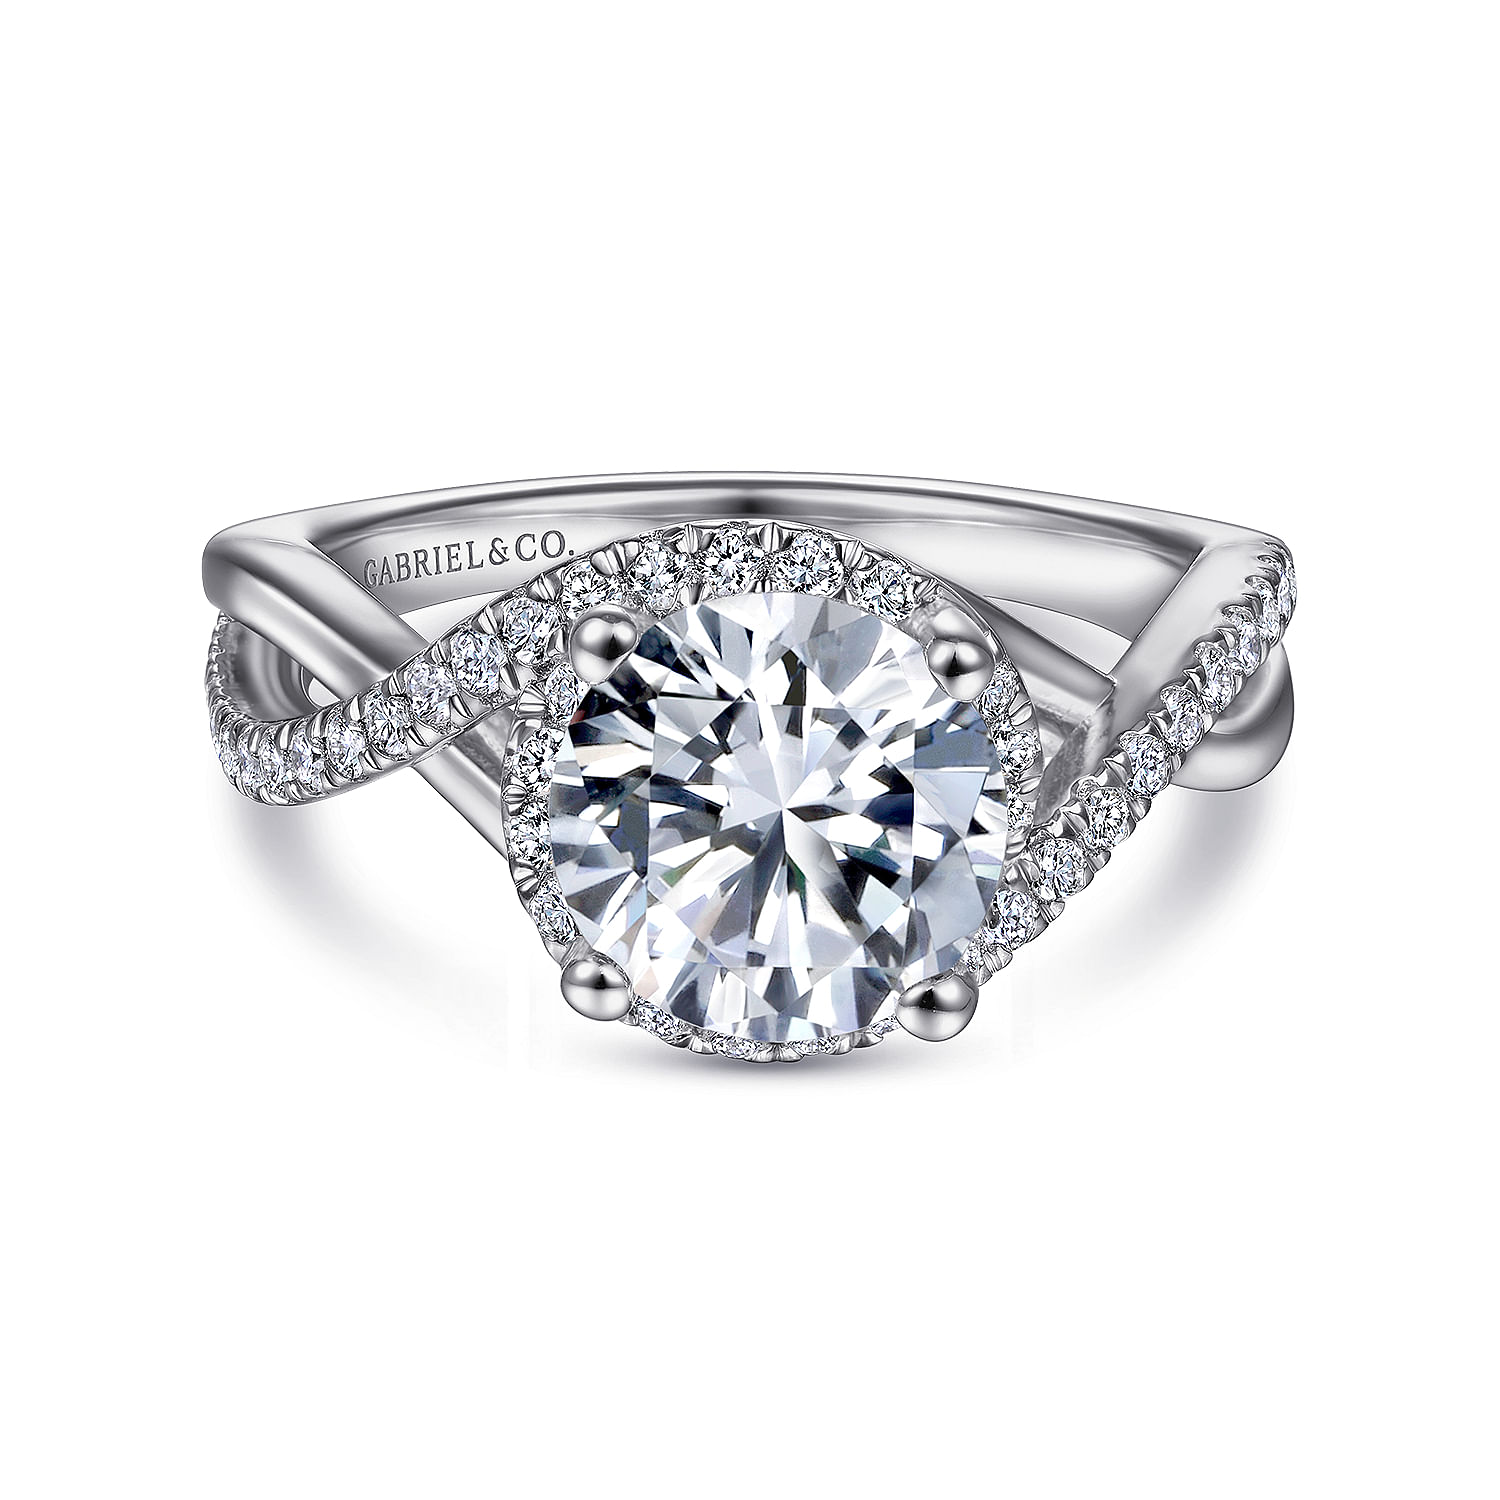 Courtney - 14K White Gold Round Twisted Diamond Engagement Ring